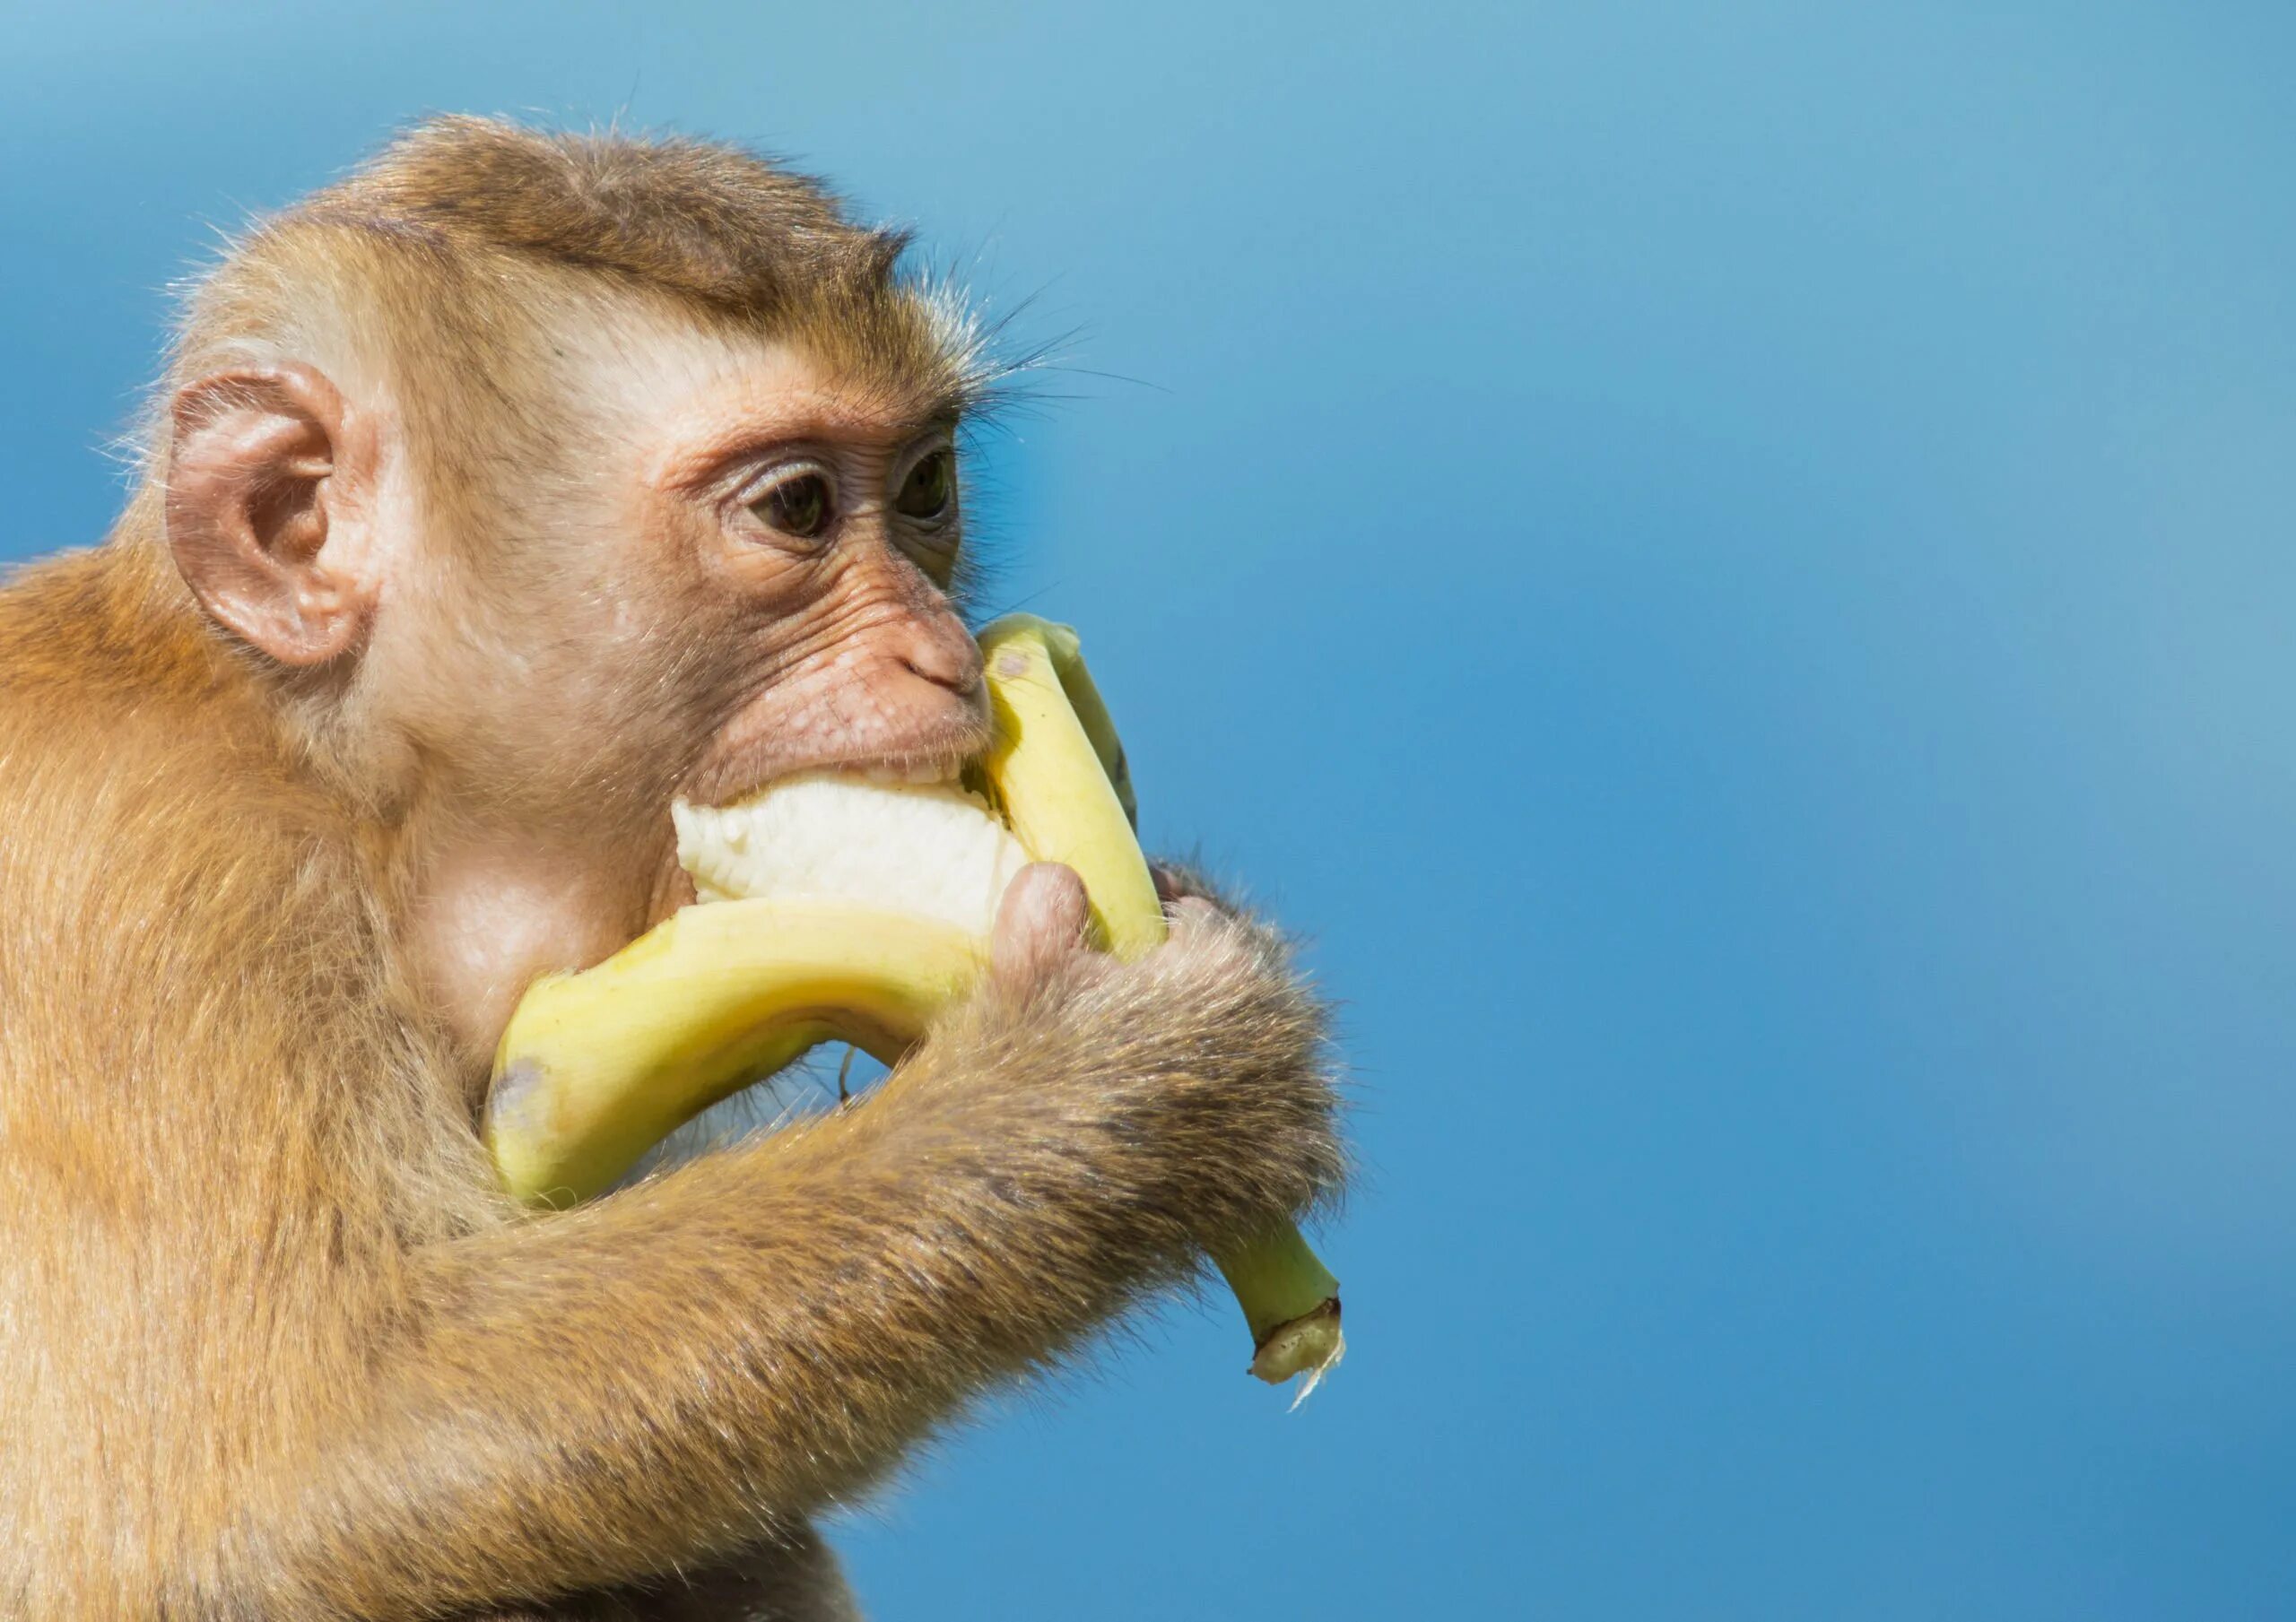 Обезьяны любят бананы. Макака с бананом. Обезьяна кушает банан. J,tpmzyf c ,fuyfyfvb. Фото обезьяны с бананом.